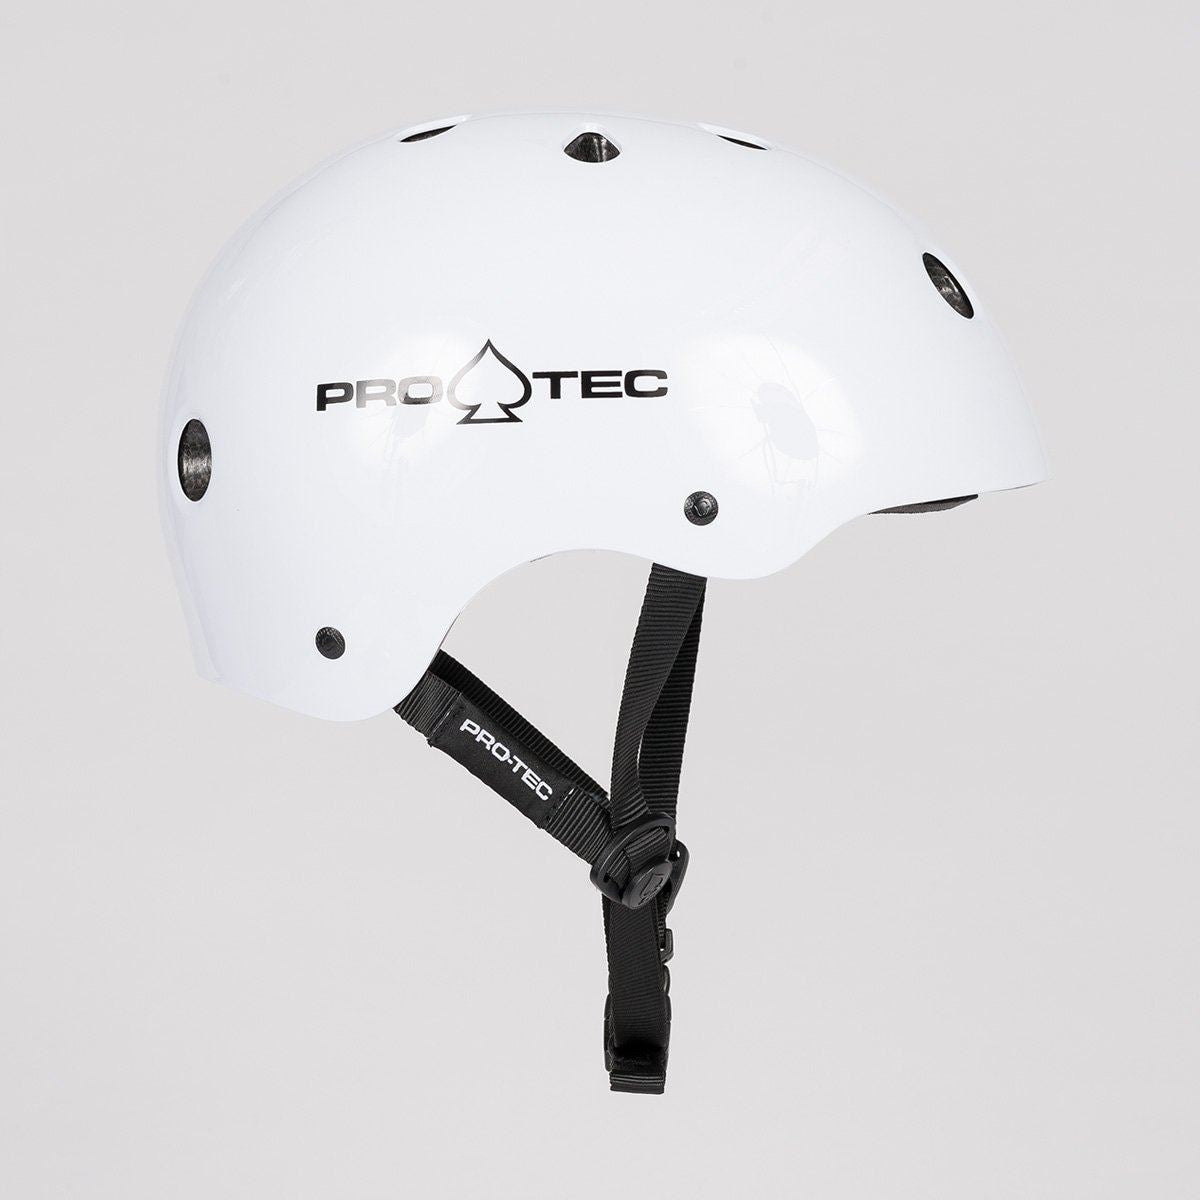 Protec Classic Certified Helmet Gloss White